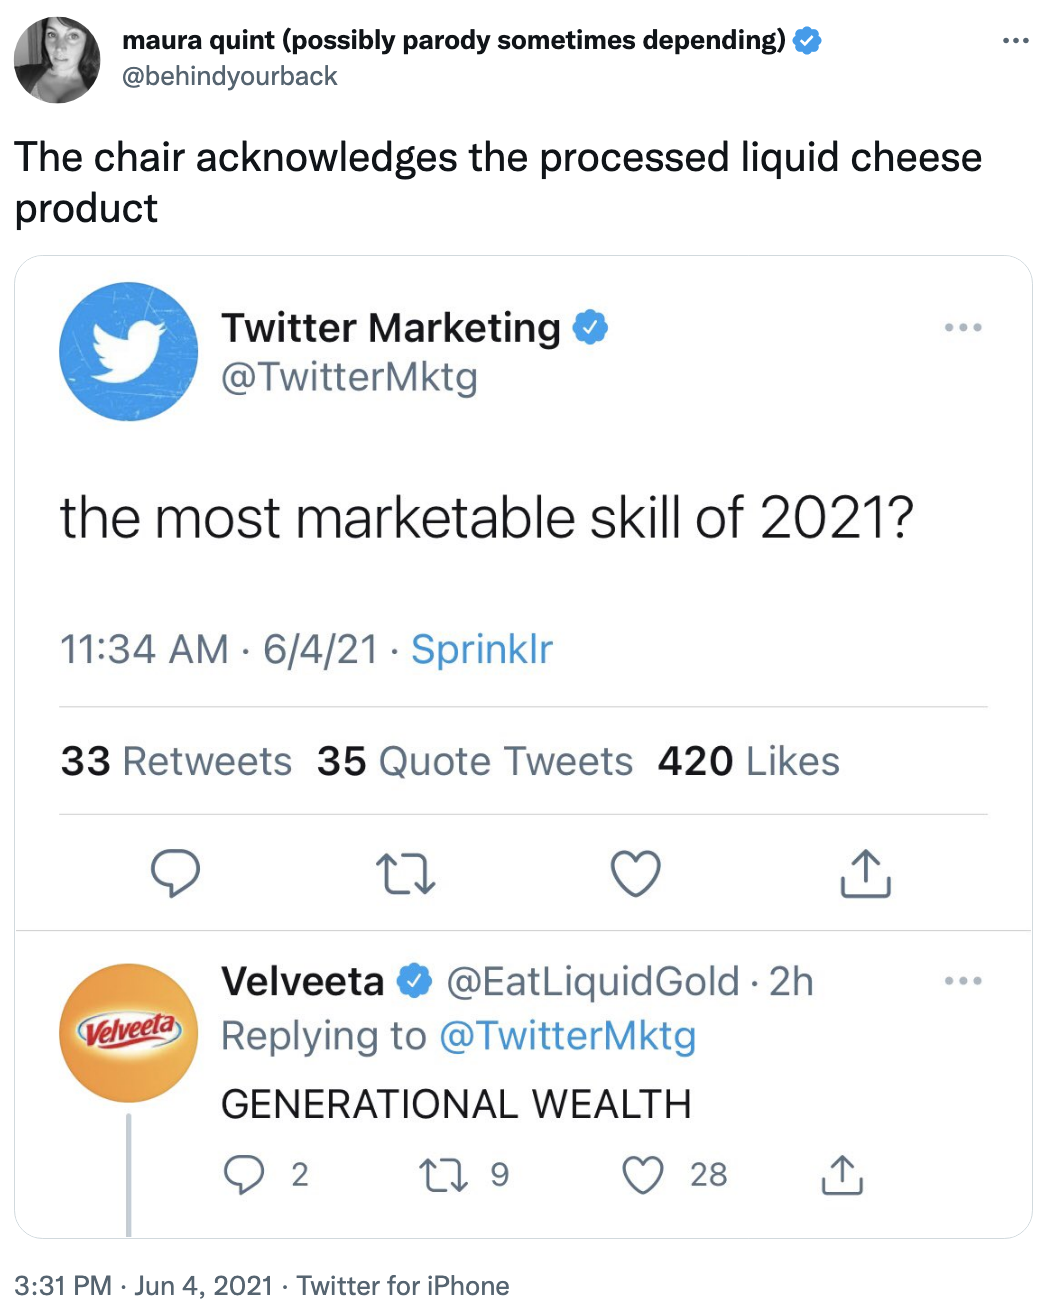 twitter帐户问道,2021年的大多数销售技能吗?和velveeta奶酪账户回答:“代际wealth"